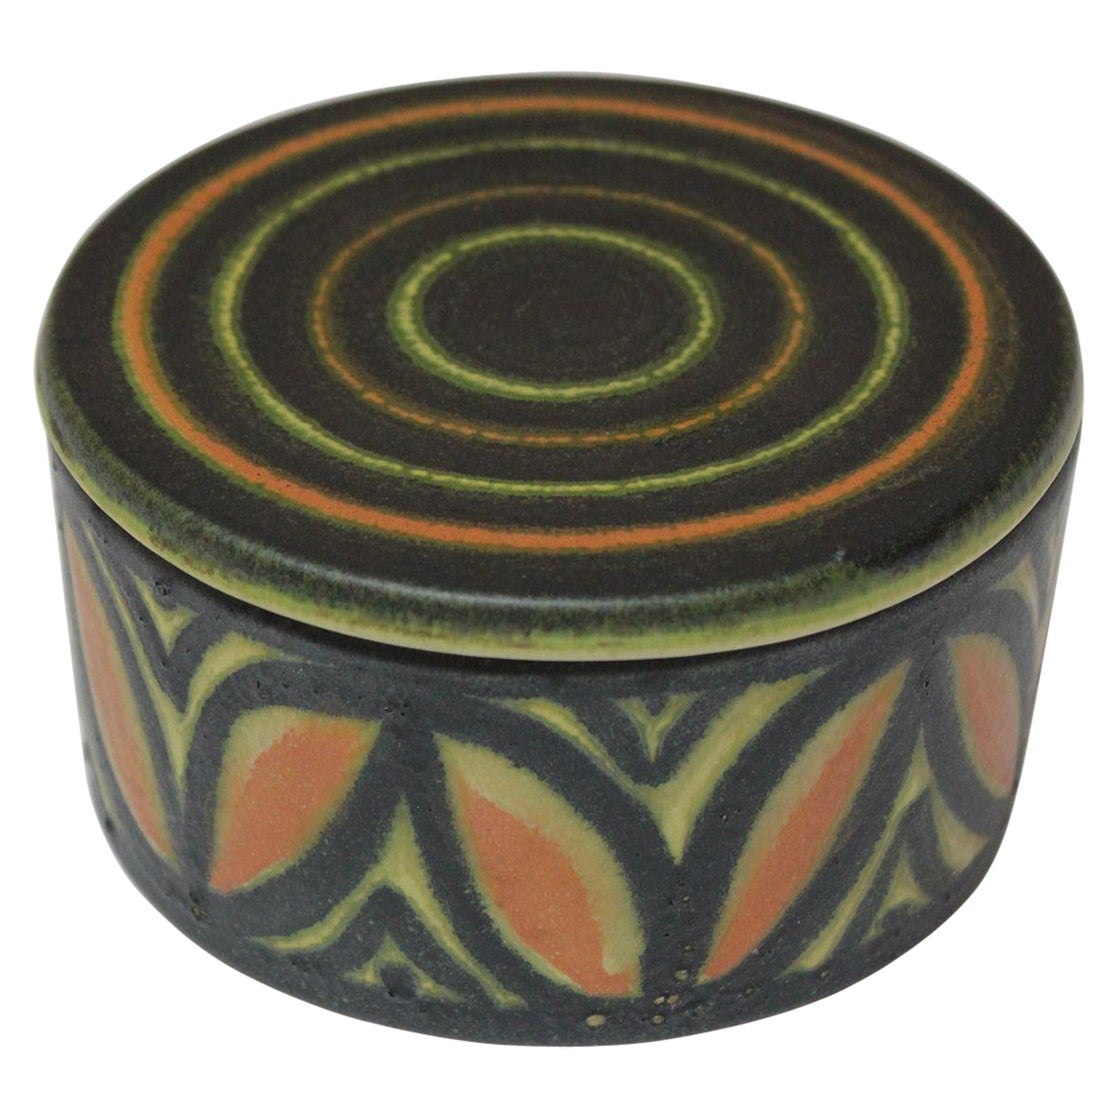 Vintage Italian Ceramic Round Box / Lidded Jar by Raymor For Sale